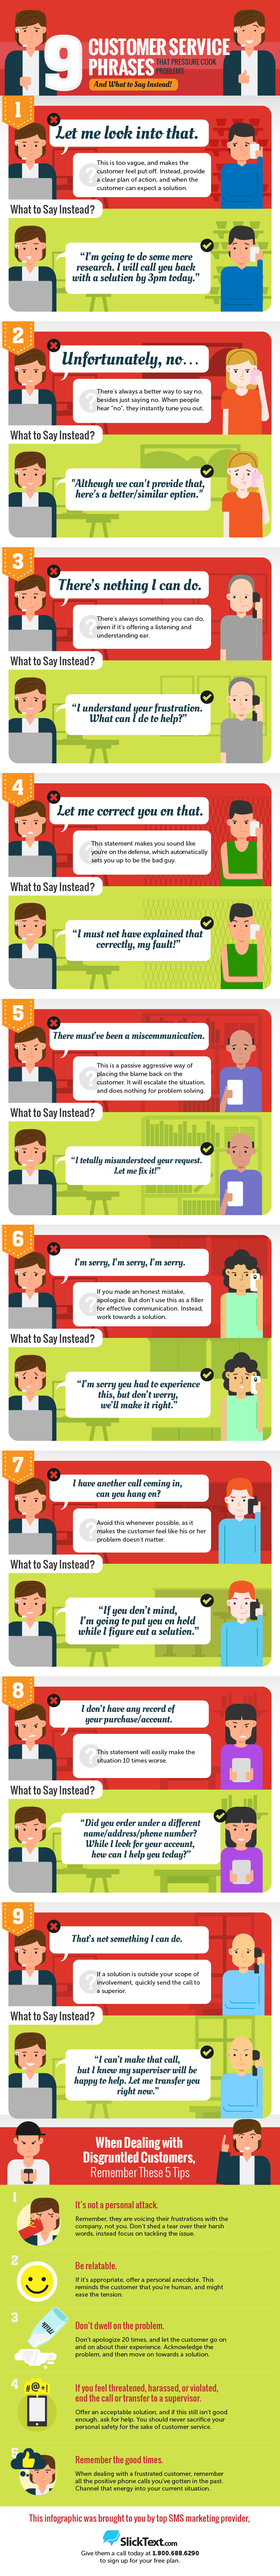 customer service phrases infographic